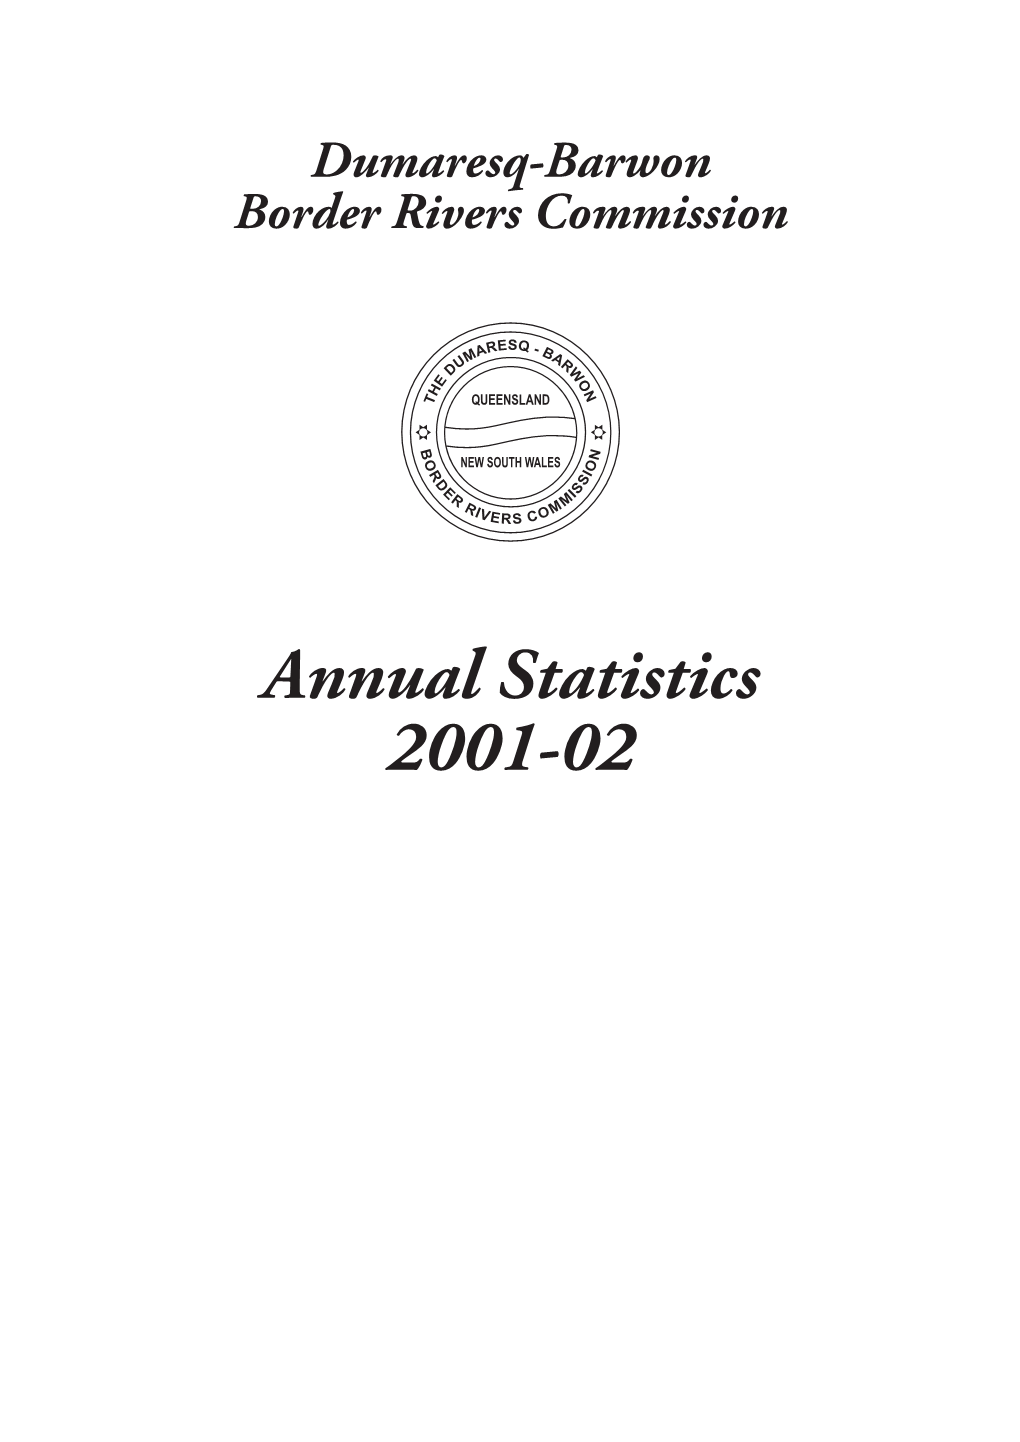 2001-02 Annual Statistics CONTENTS